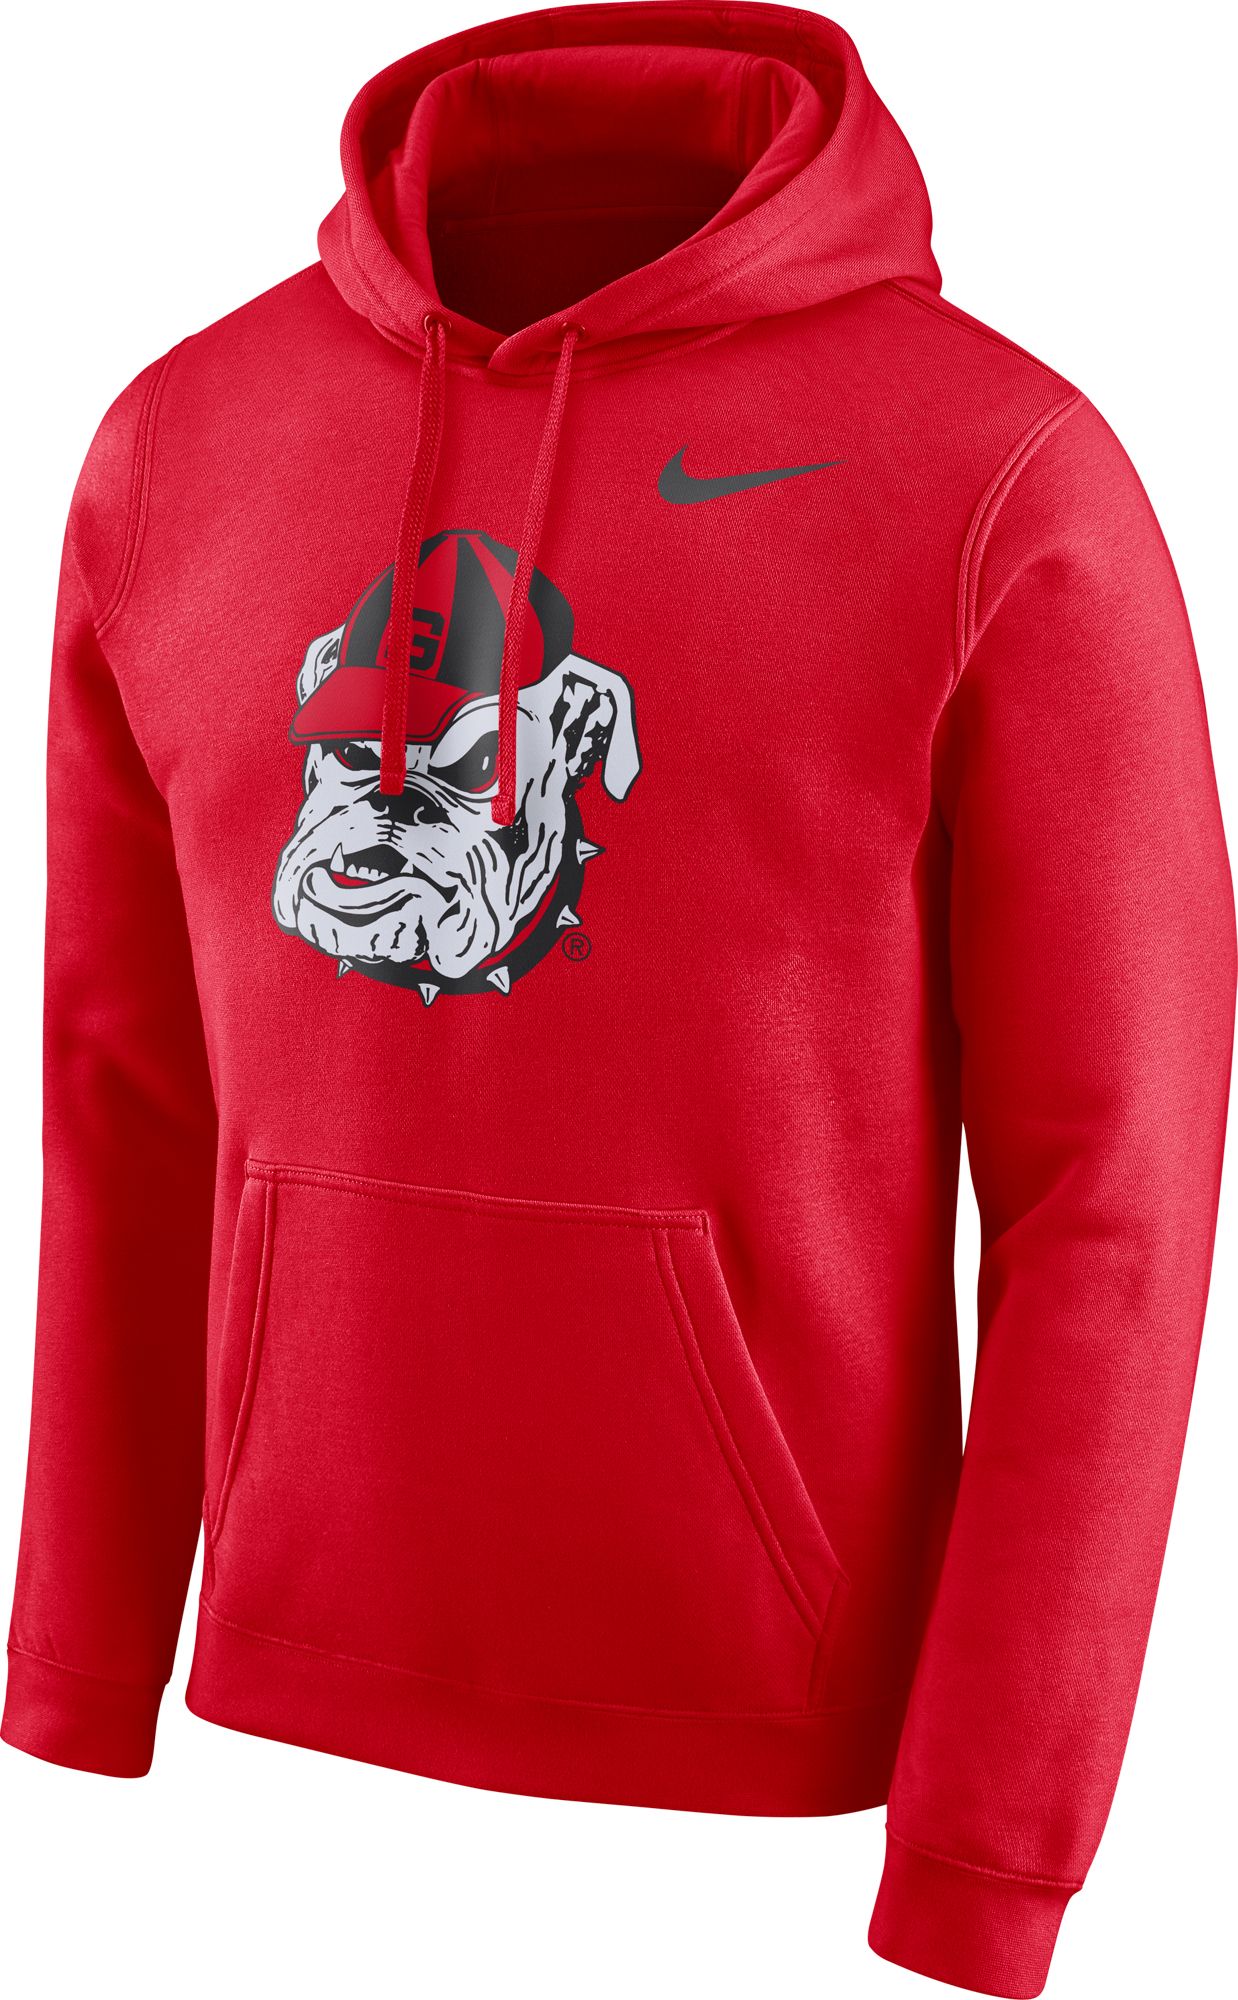 georgia bulldogs hoodie nike